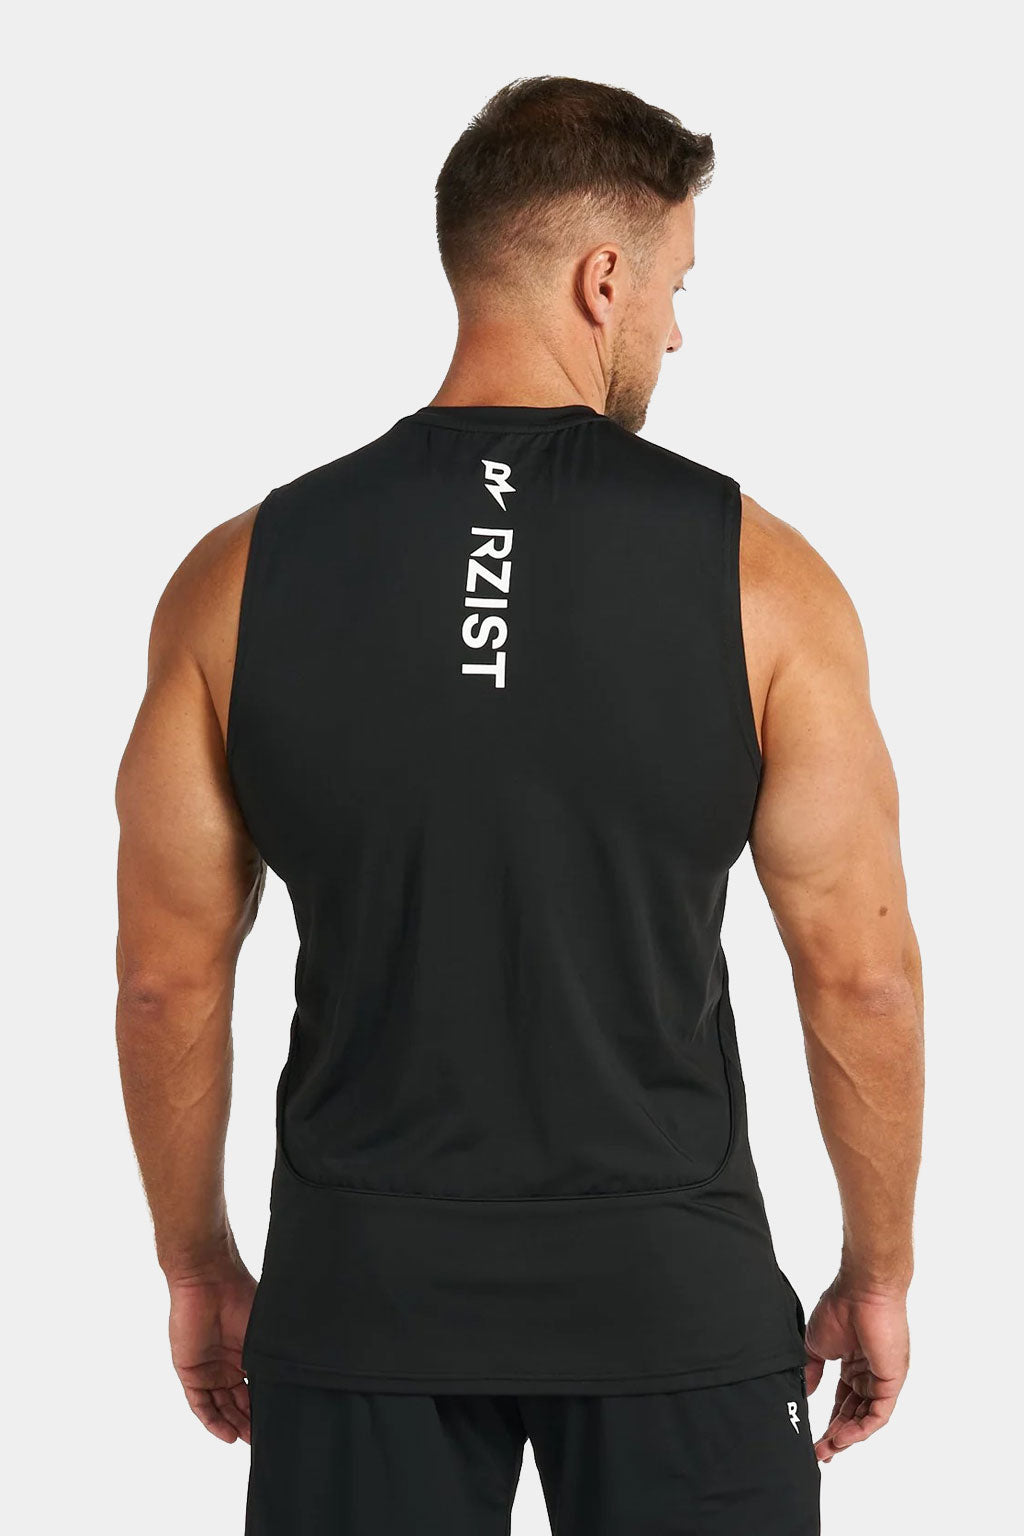 Rzist - Sleeveless Performance Shirt